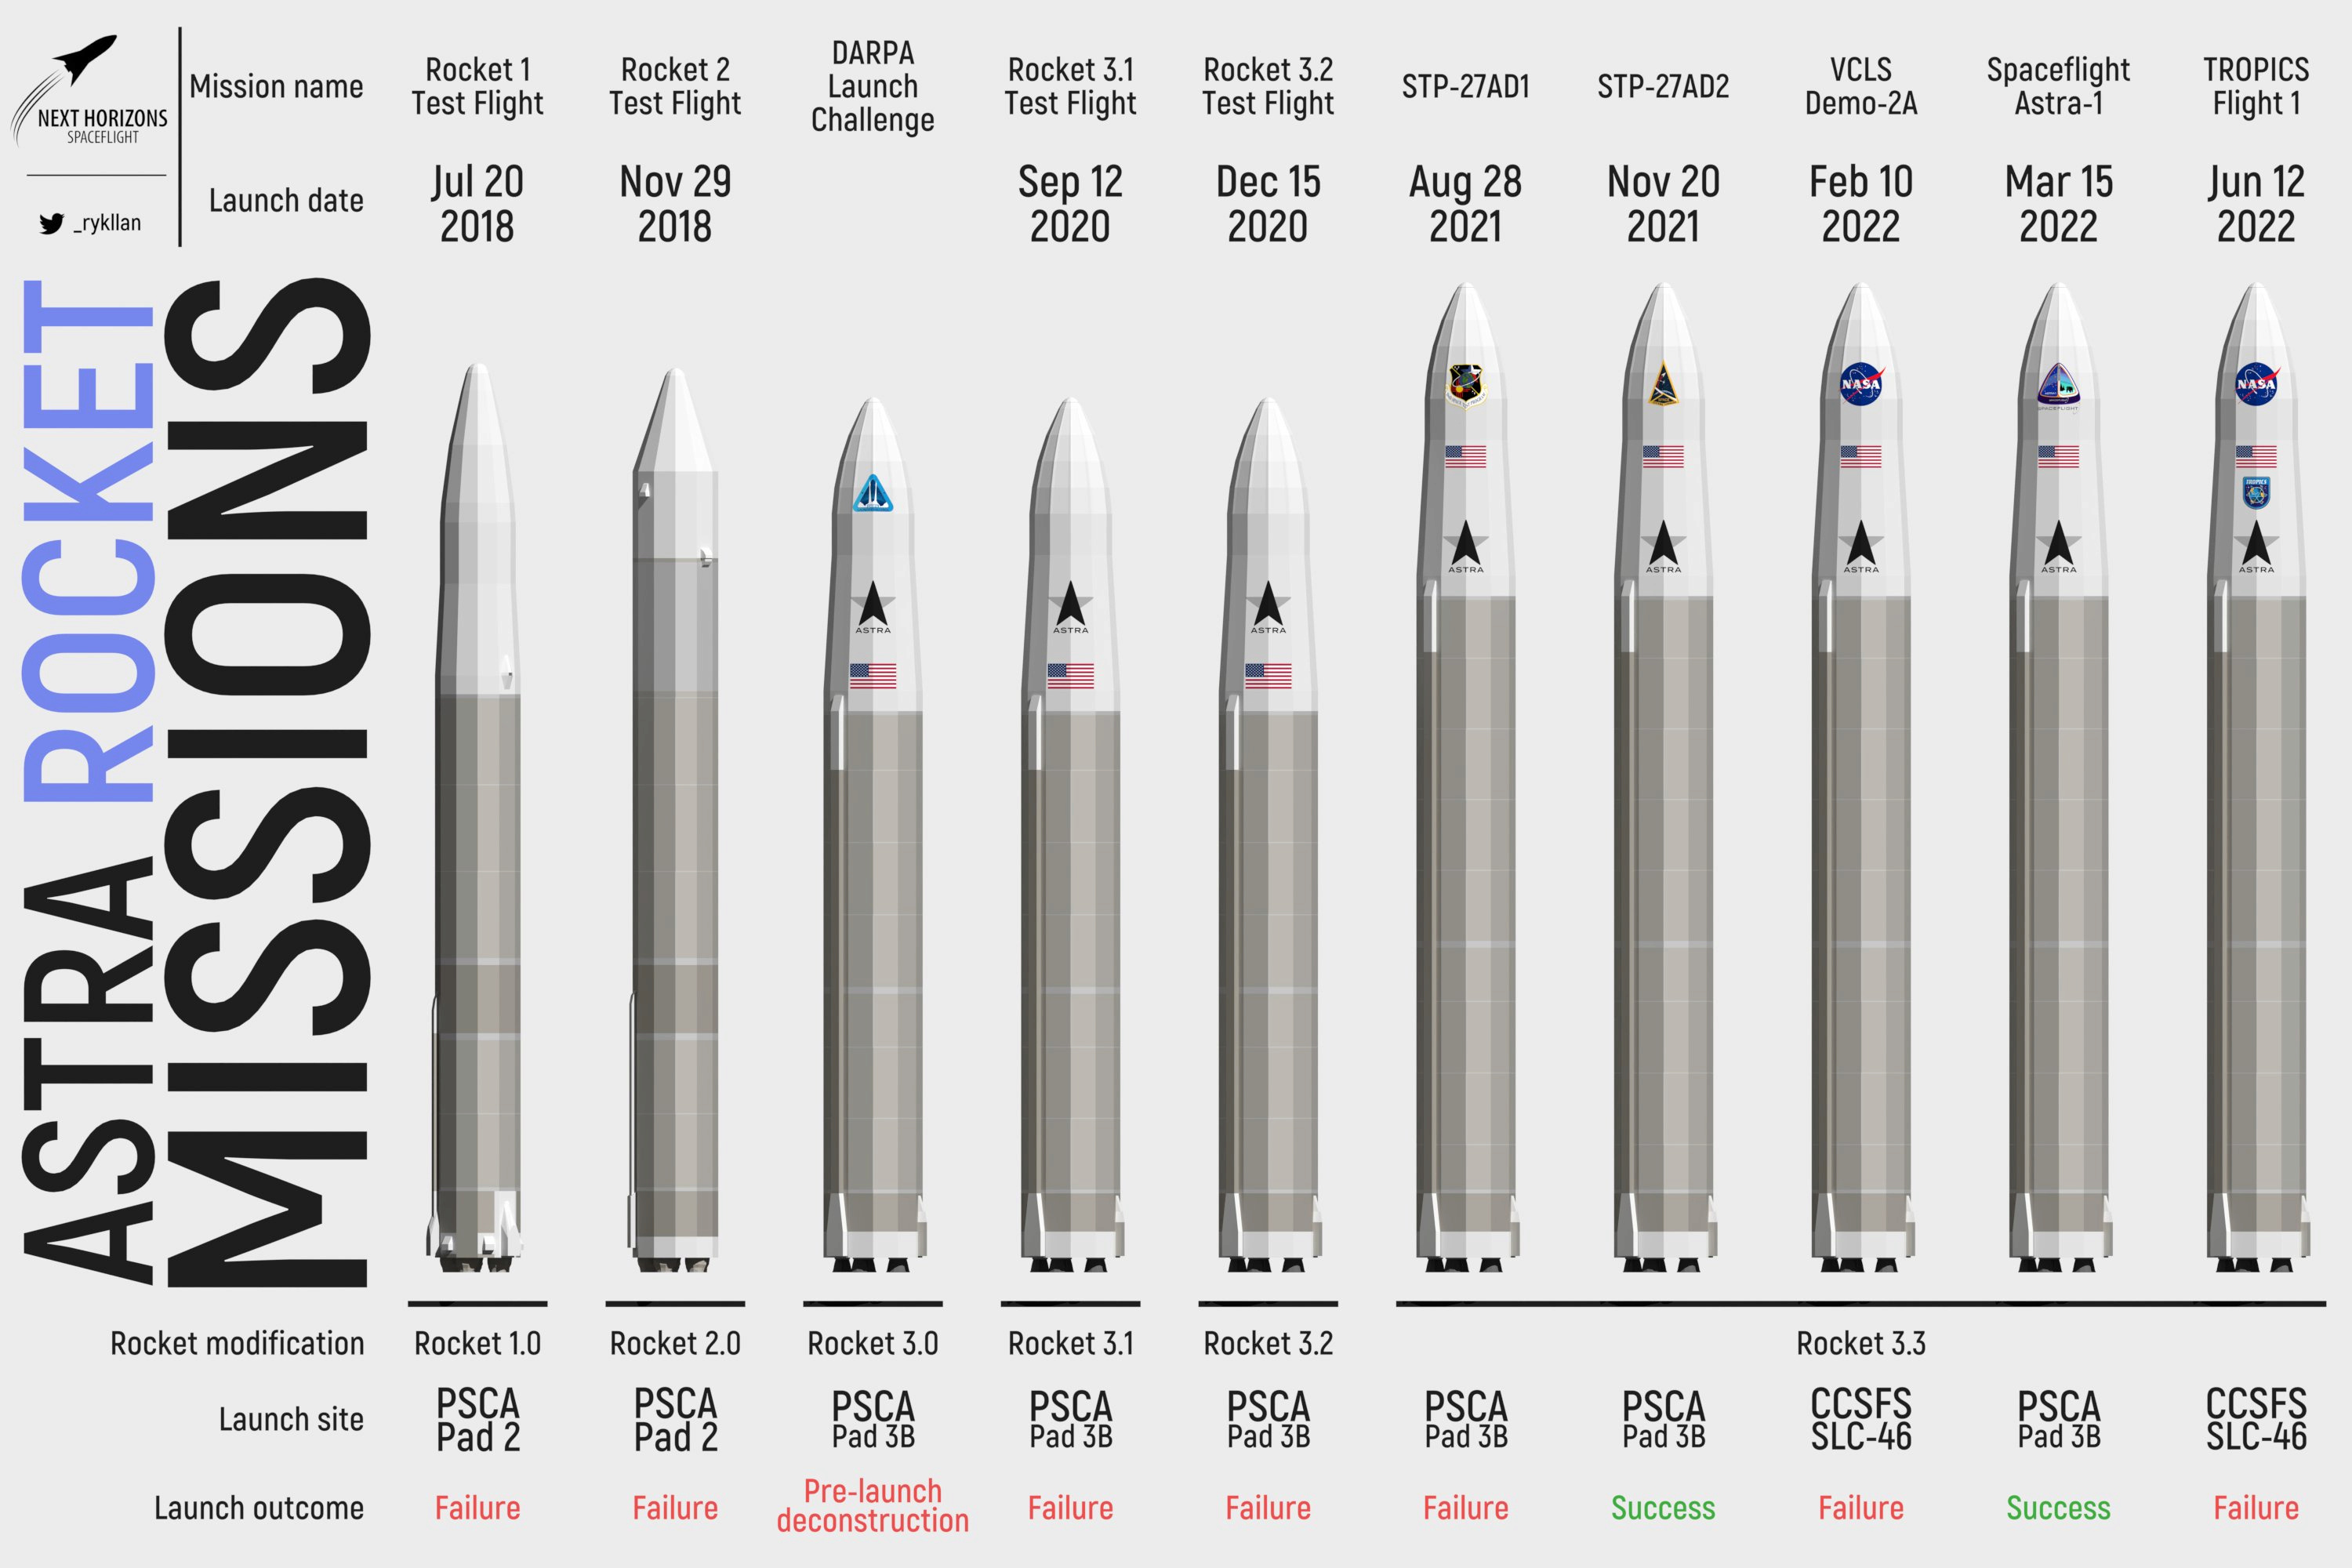 [Astra Space] Rocket 3.3 (TROPICS vol 1) - KSC - 12.6.2022 [Echec] - Page 2 Image174